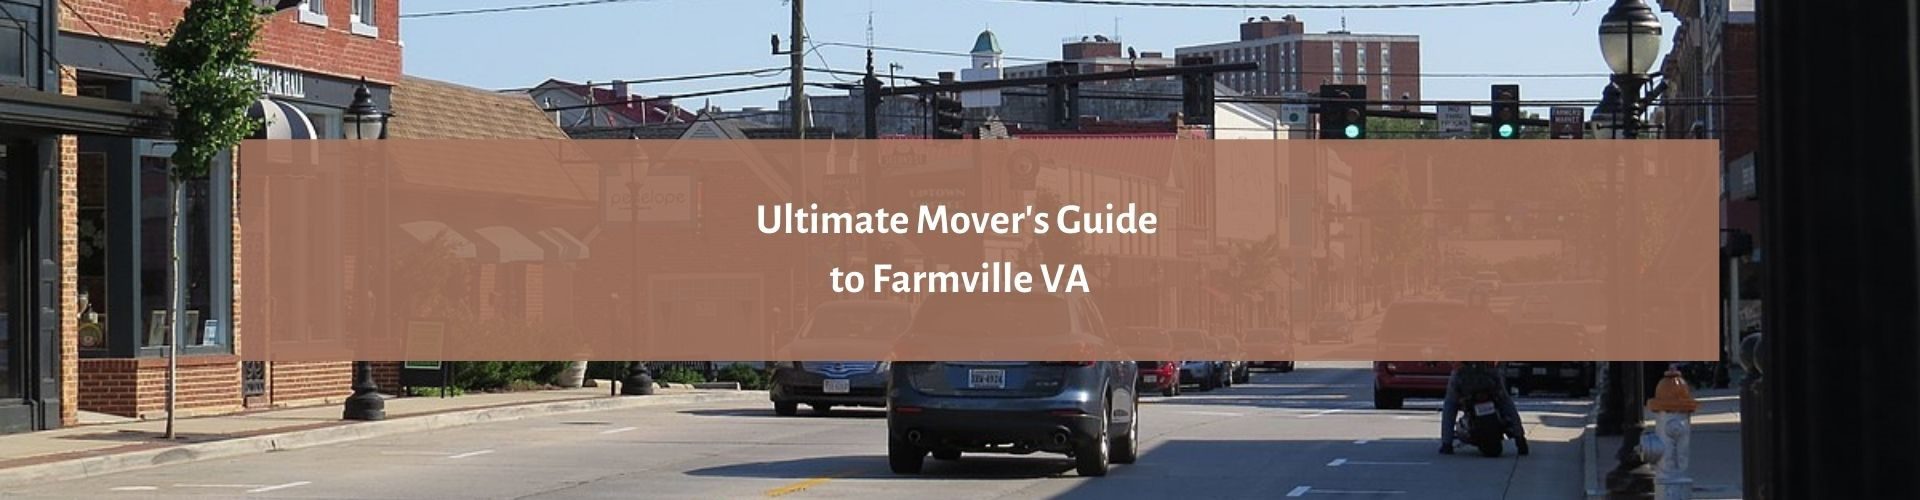 Storage Sense guide to Farmville, VA